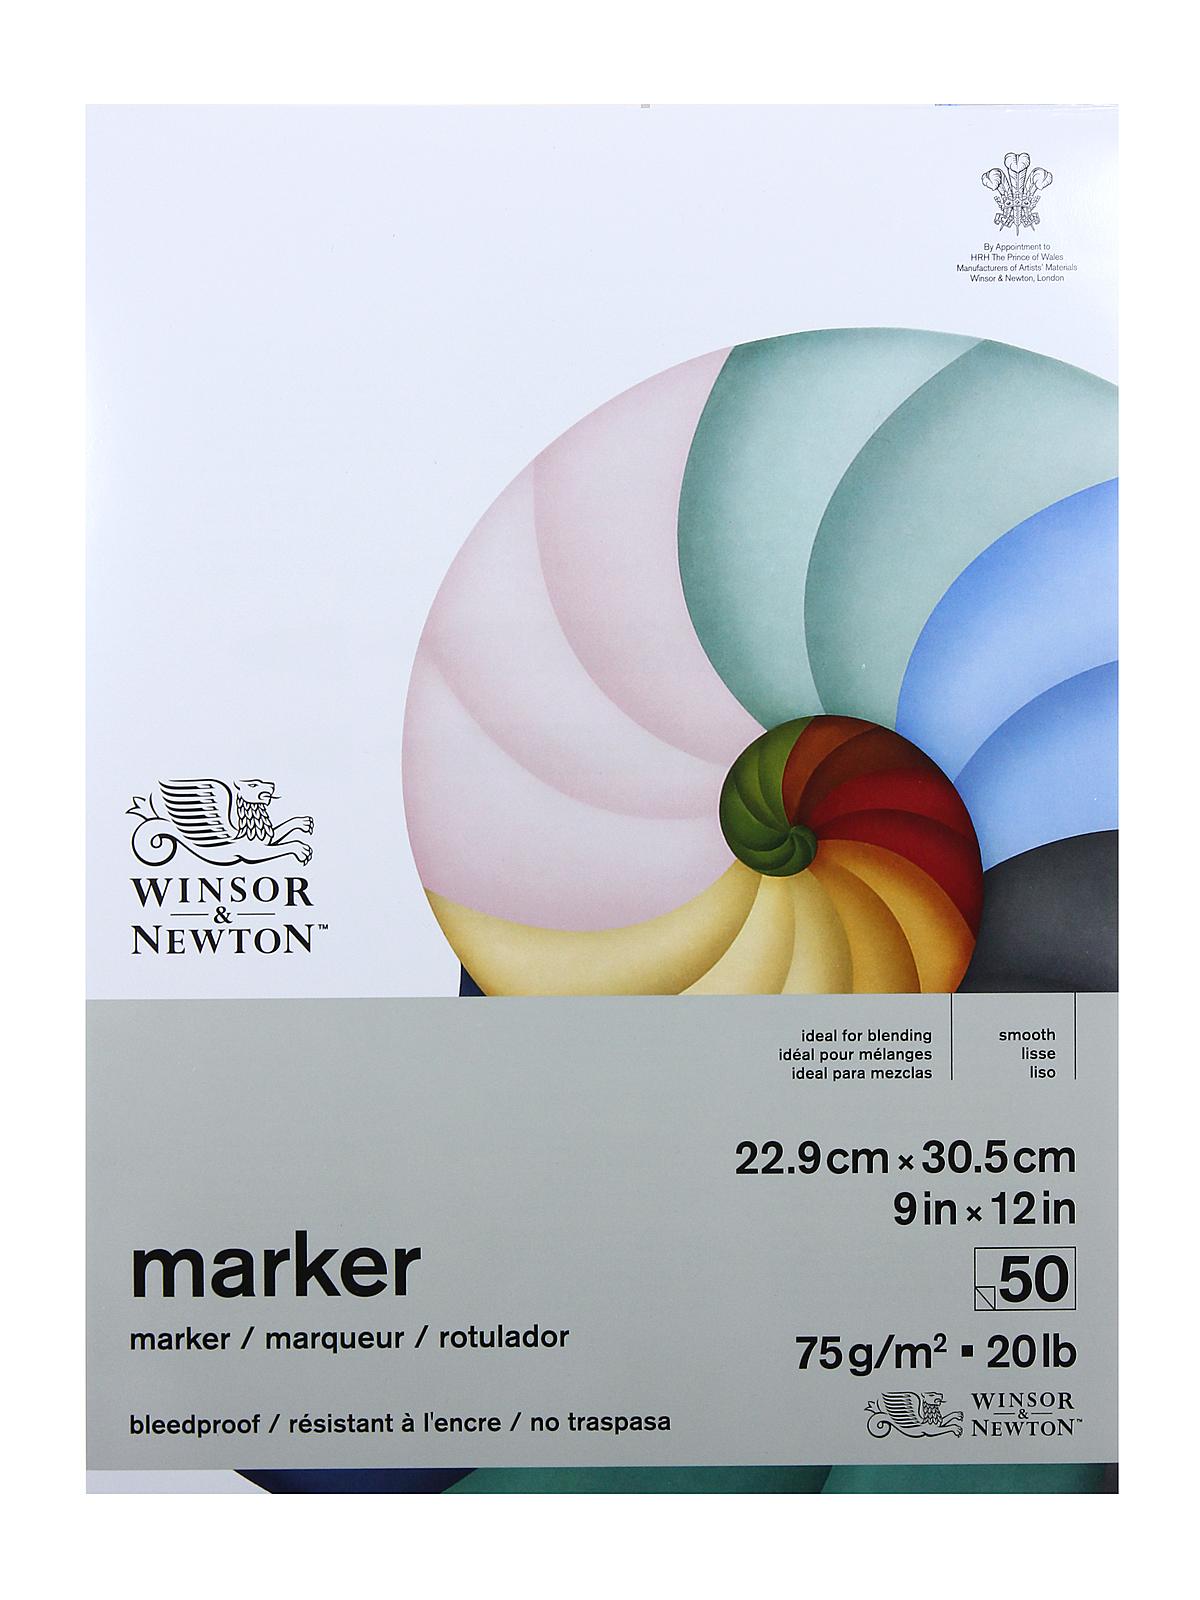 Winsor & Newton BleedProof Marker Paper Pad 11 x 14